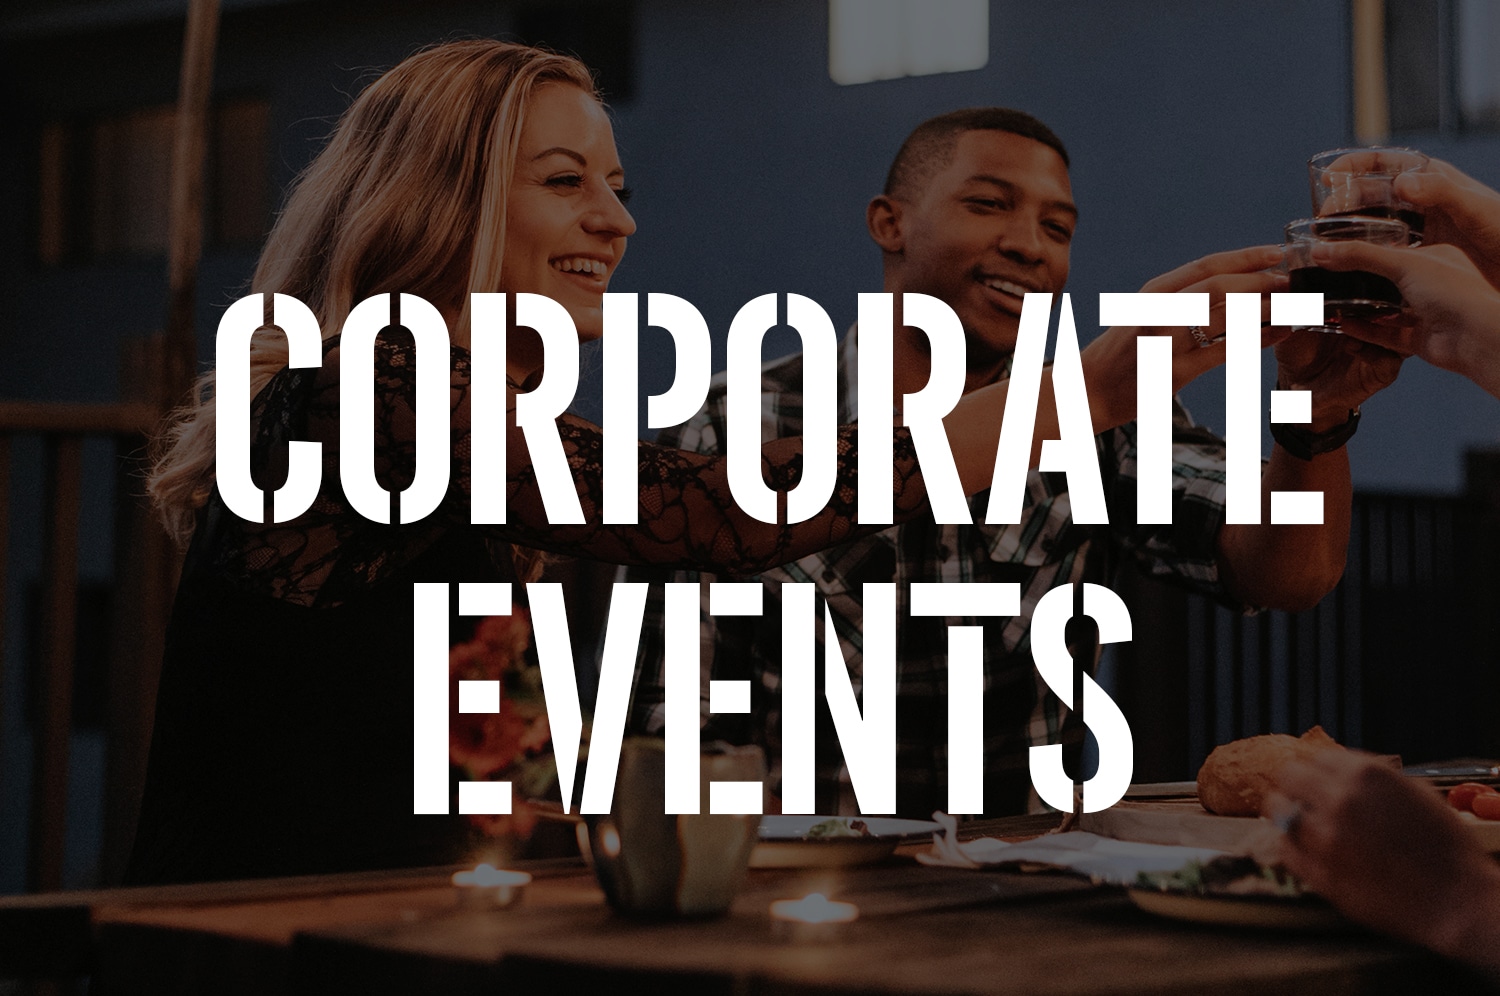 Boulder Corporate Events